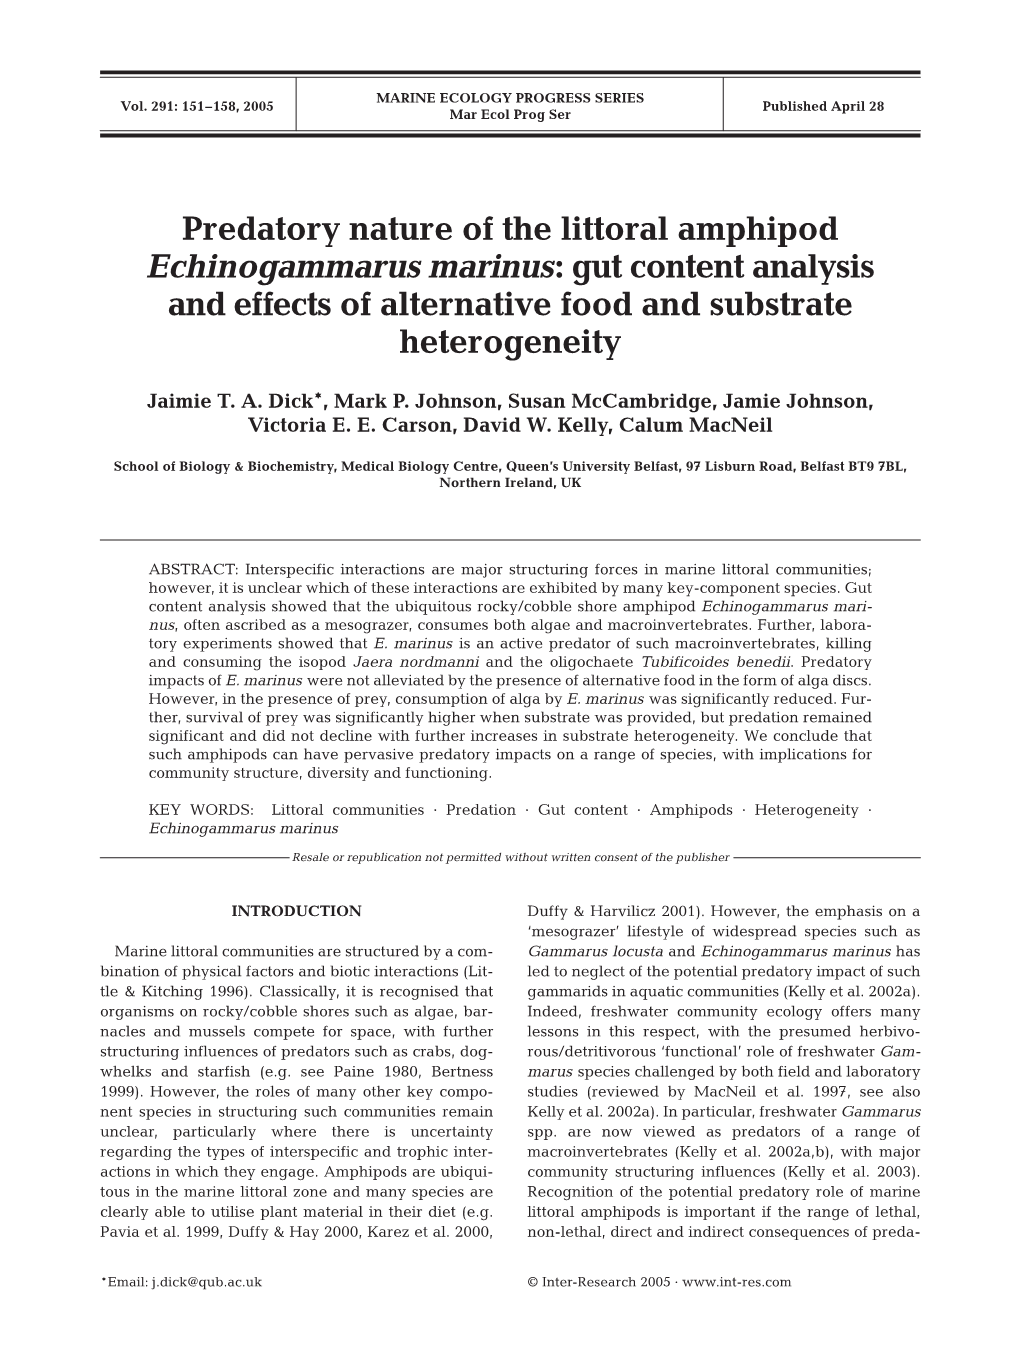 Predatory Nature of the Littoral Amphipod Echinogammarus Marinus: Gut Content Analysis and Effects of Alternative Food and Substrate Heterogeneity